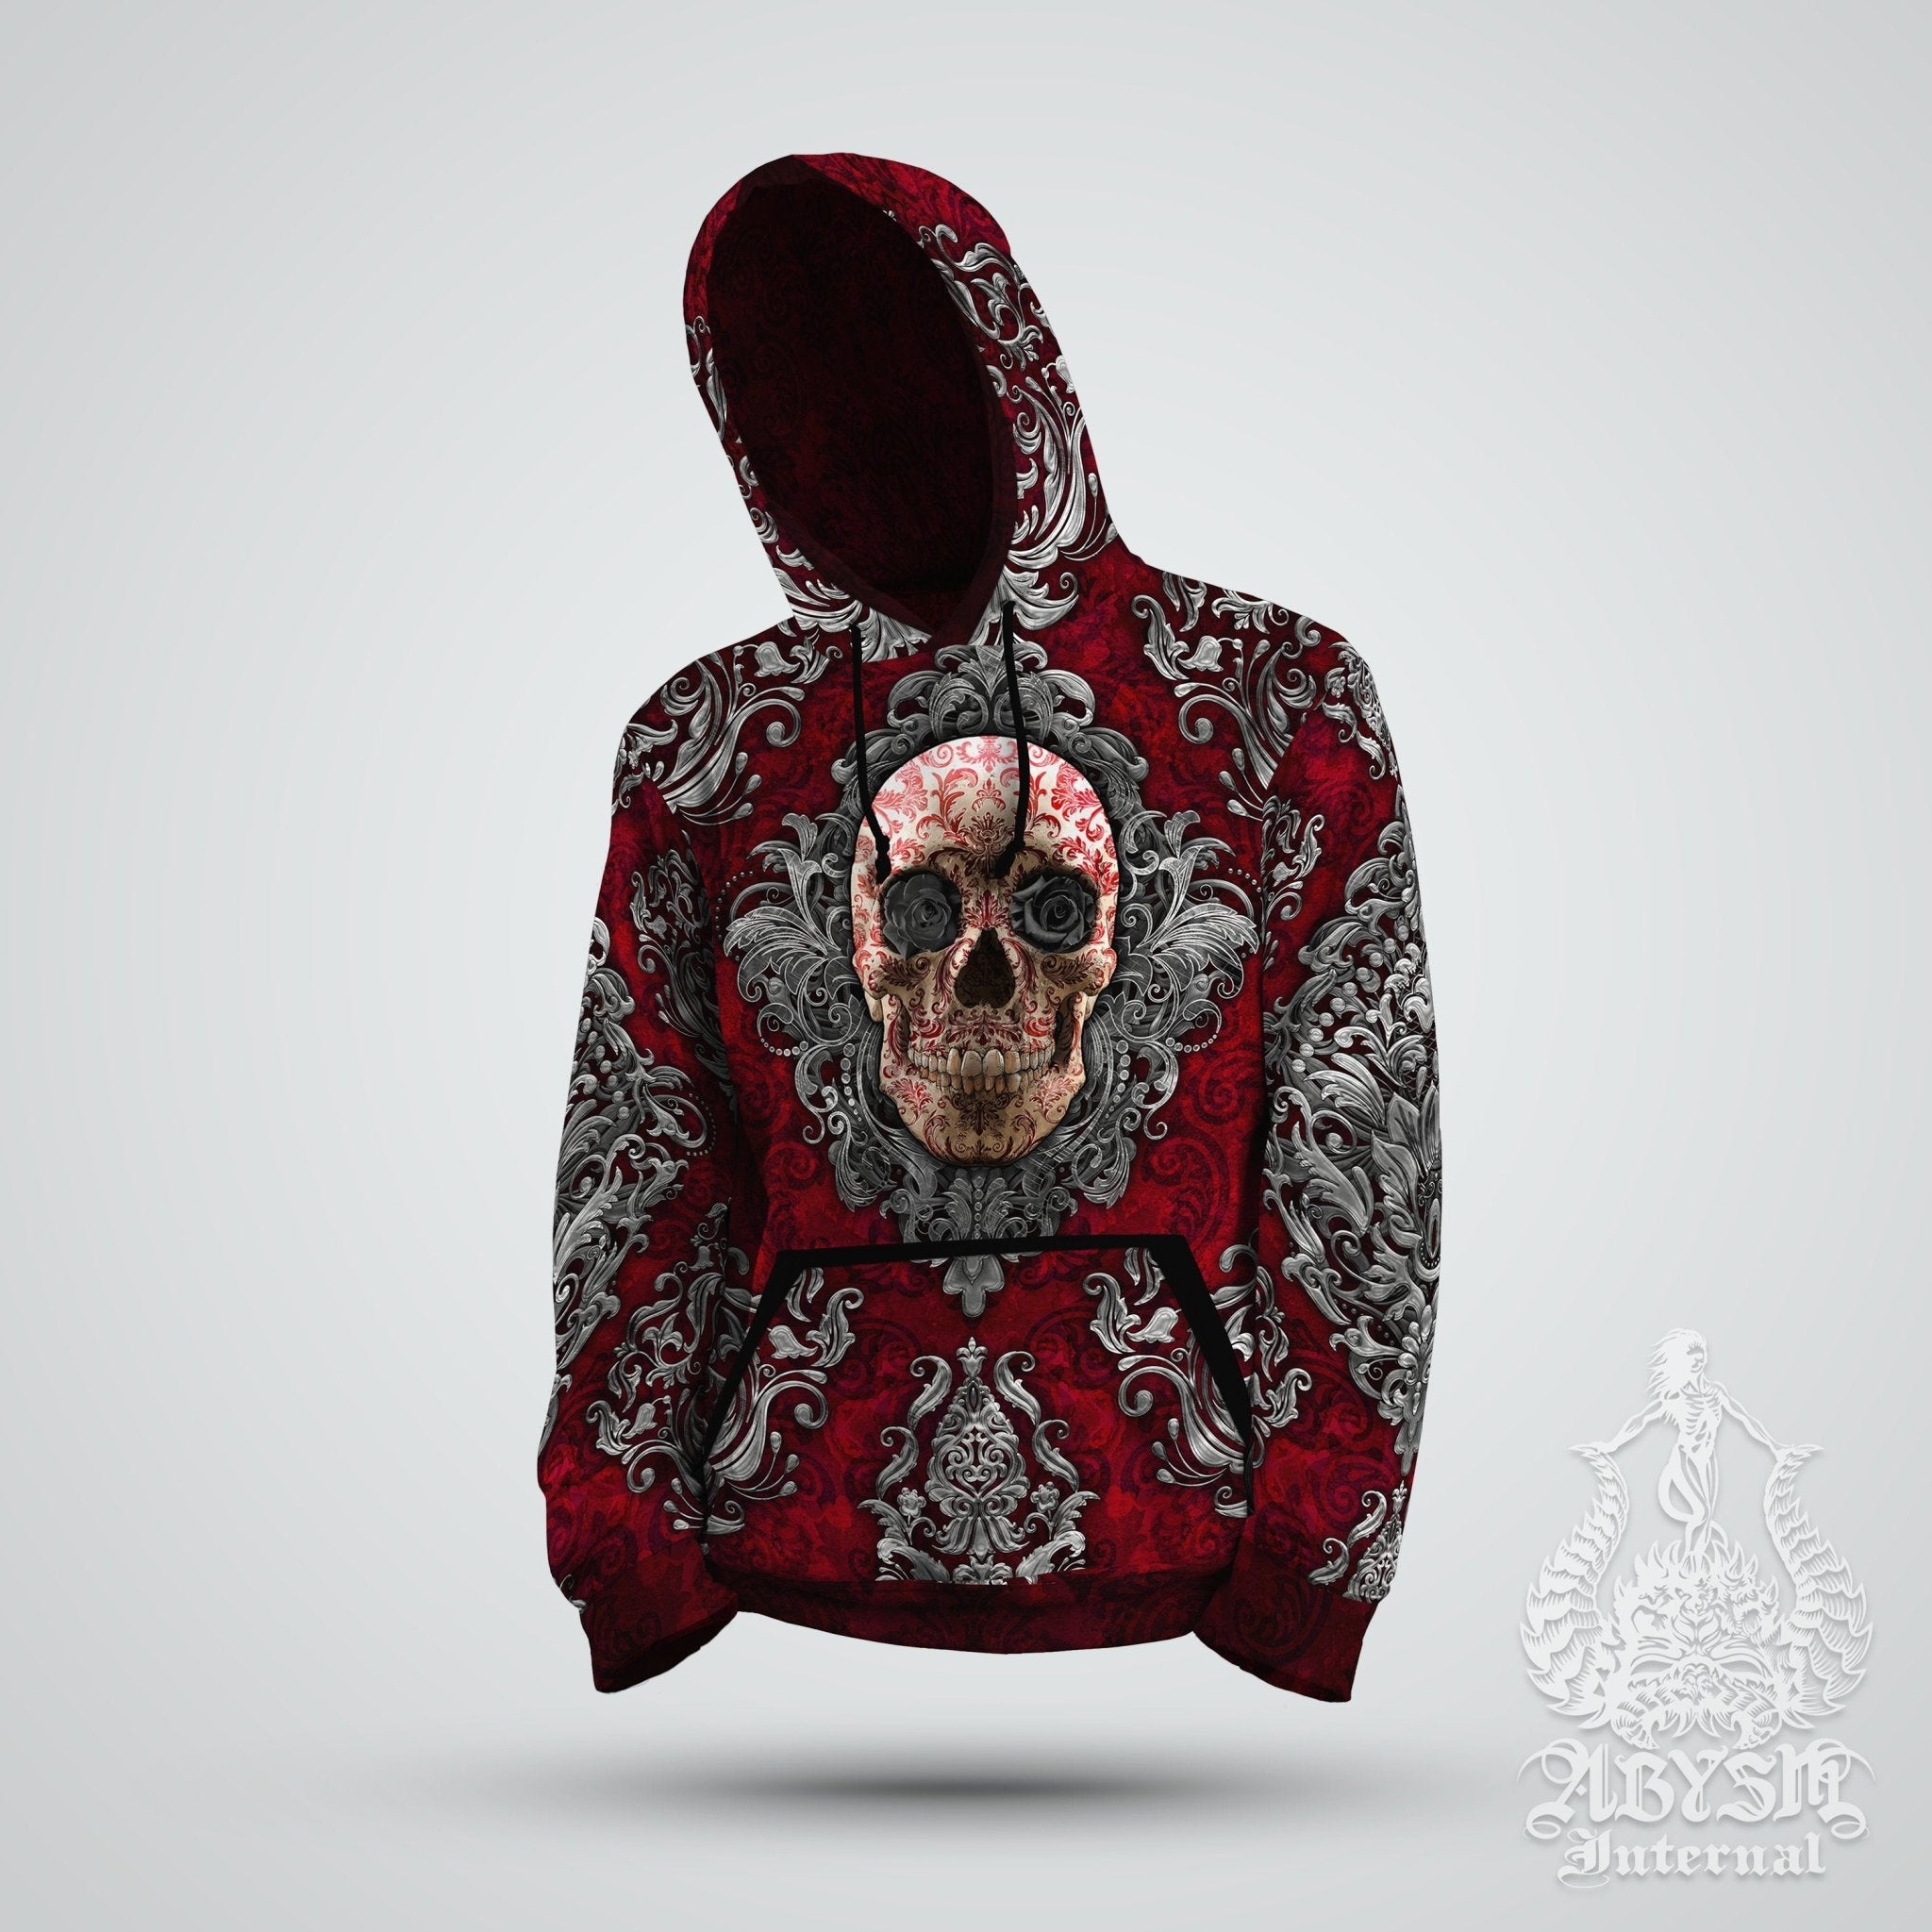 Skull Hoodie, Gothic Streetwear, Goth Outfit, Alternative Clothing, Unisex - Abysm Internal